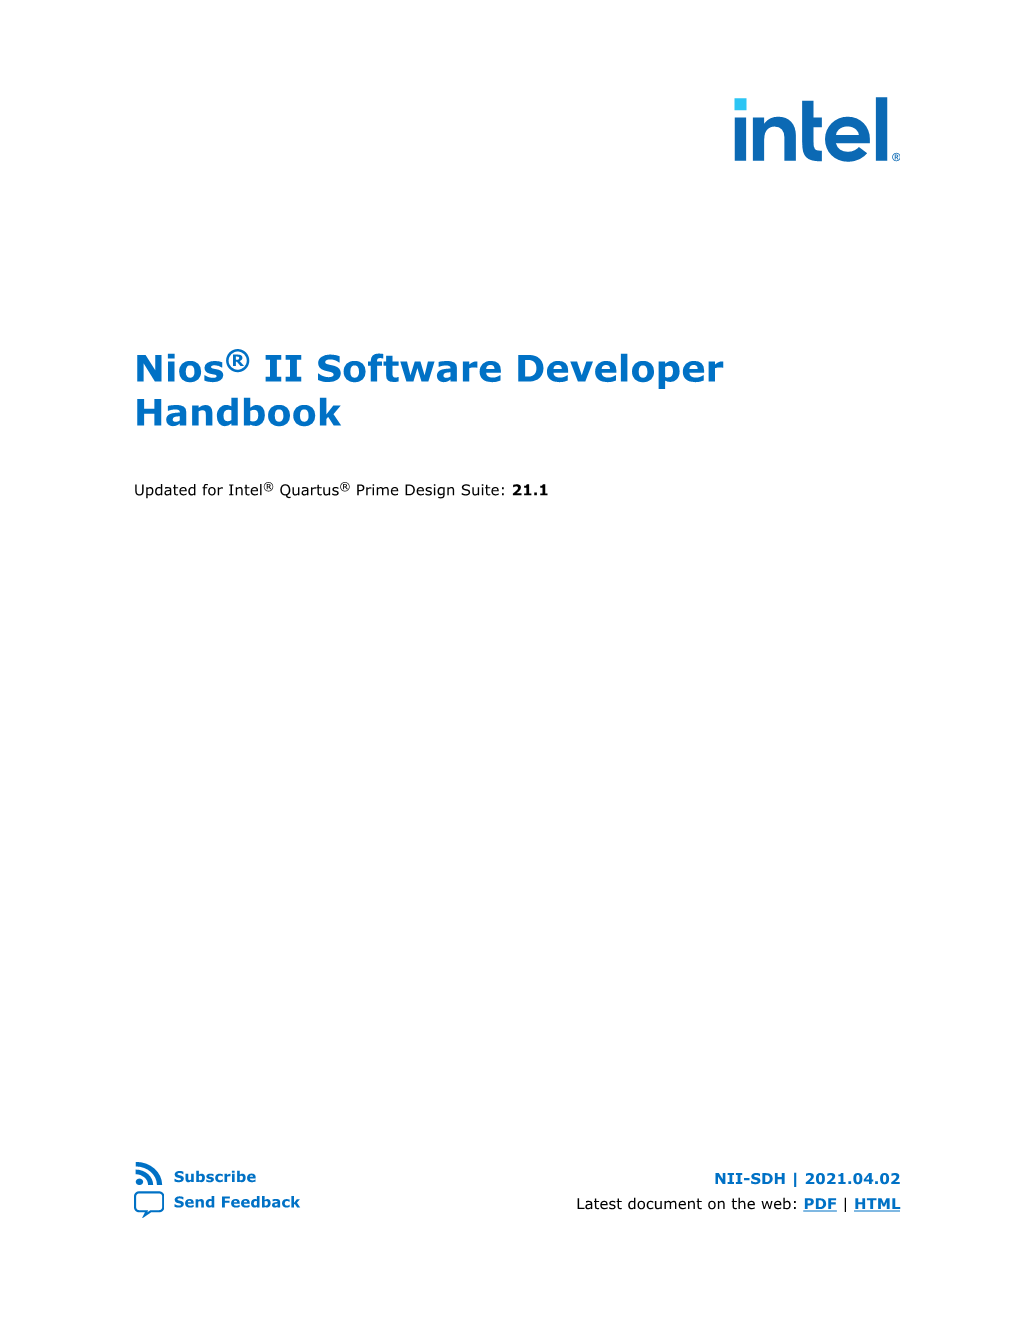 Nios® II Software Developer Handbook